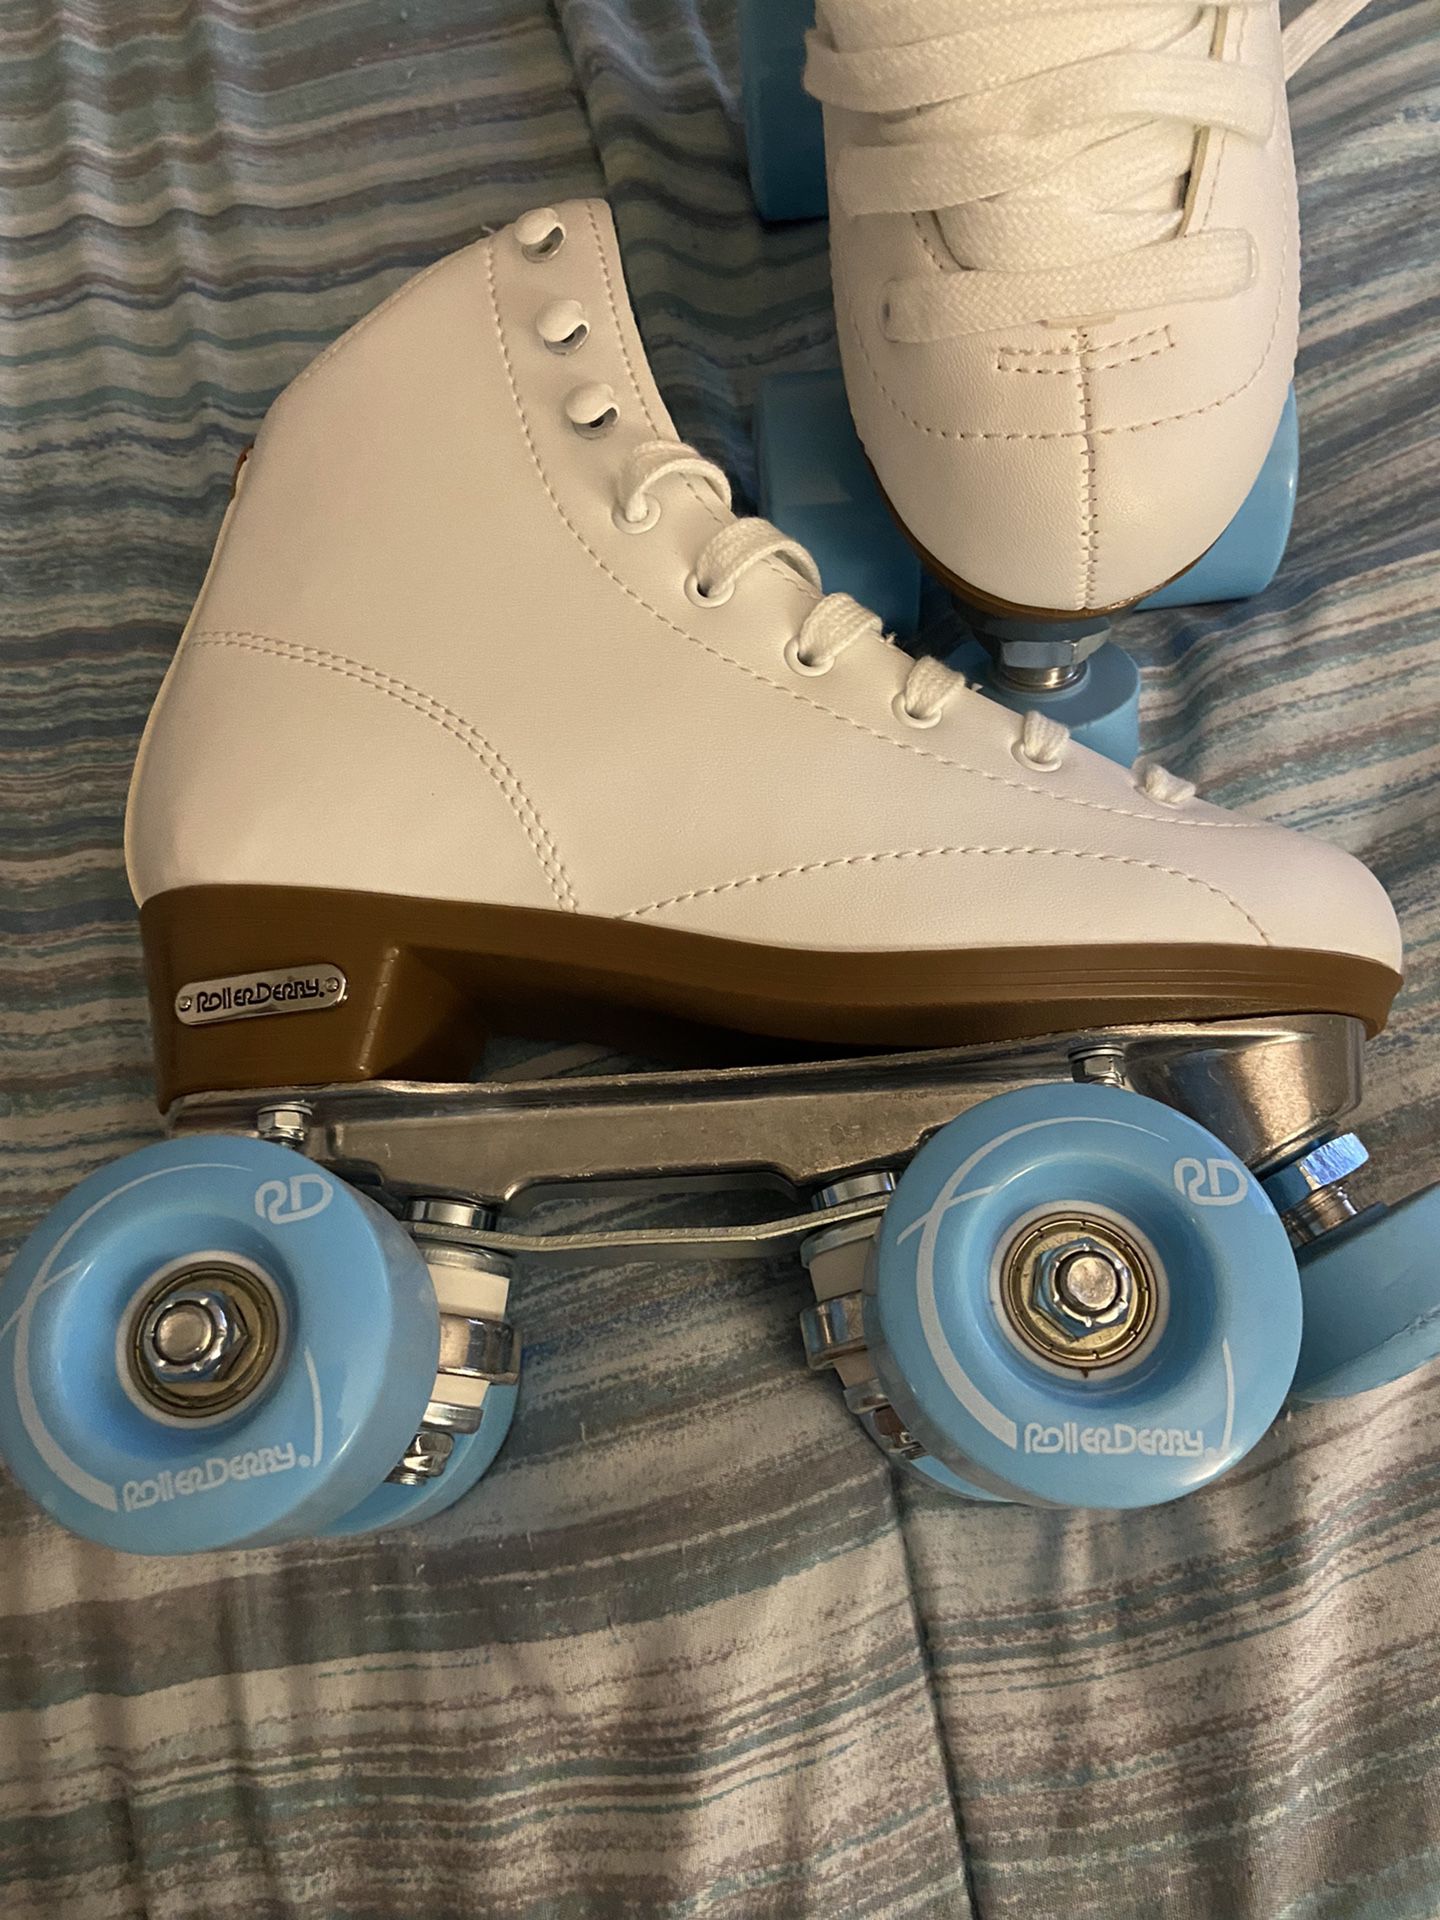 Roller Darby Skates